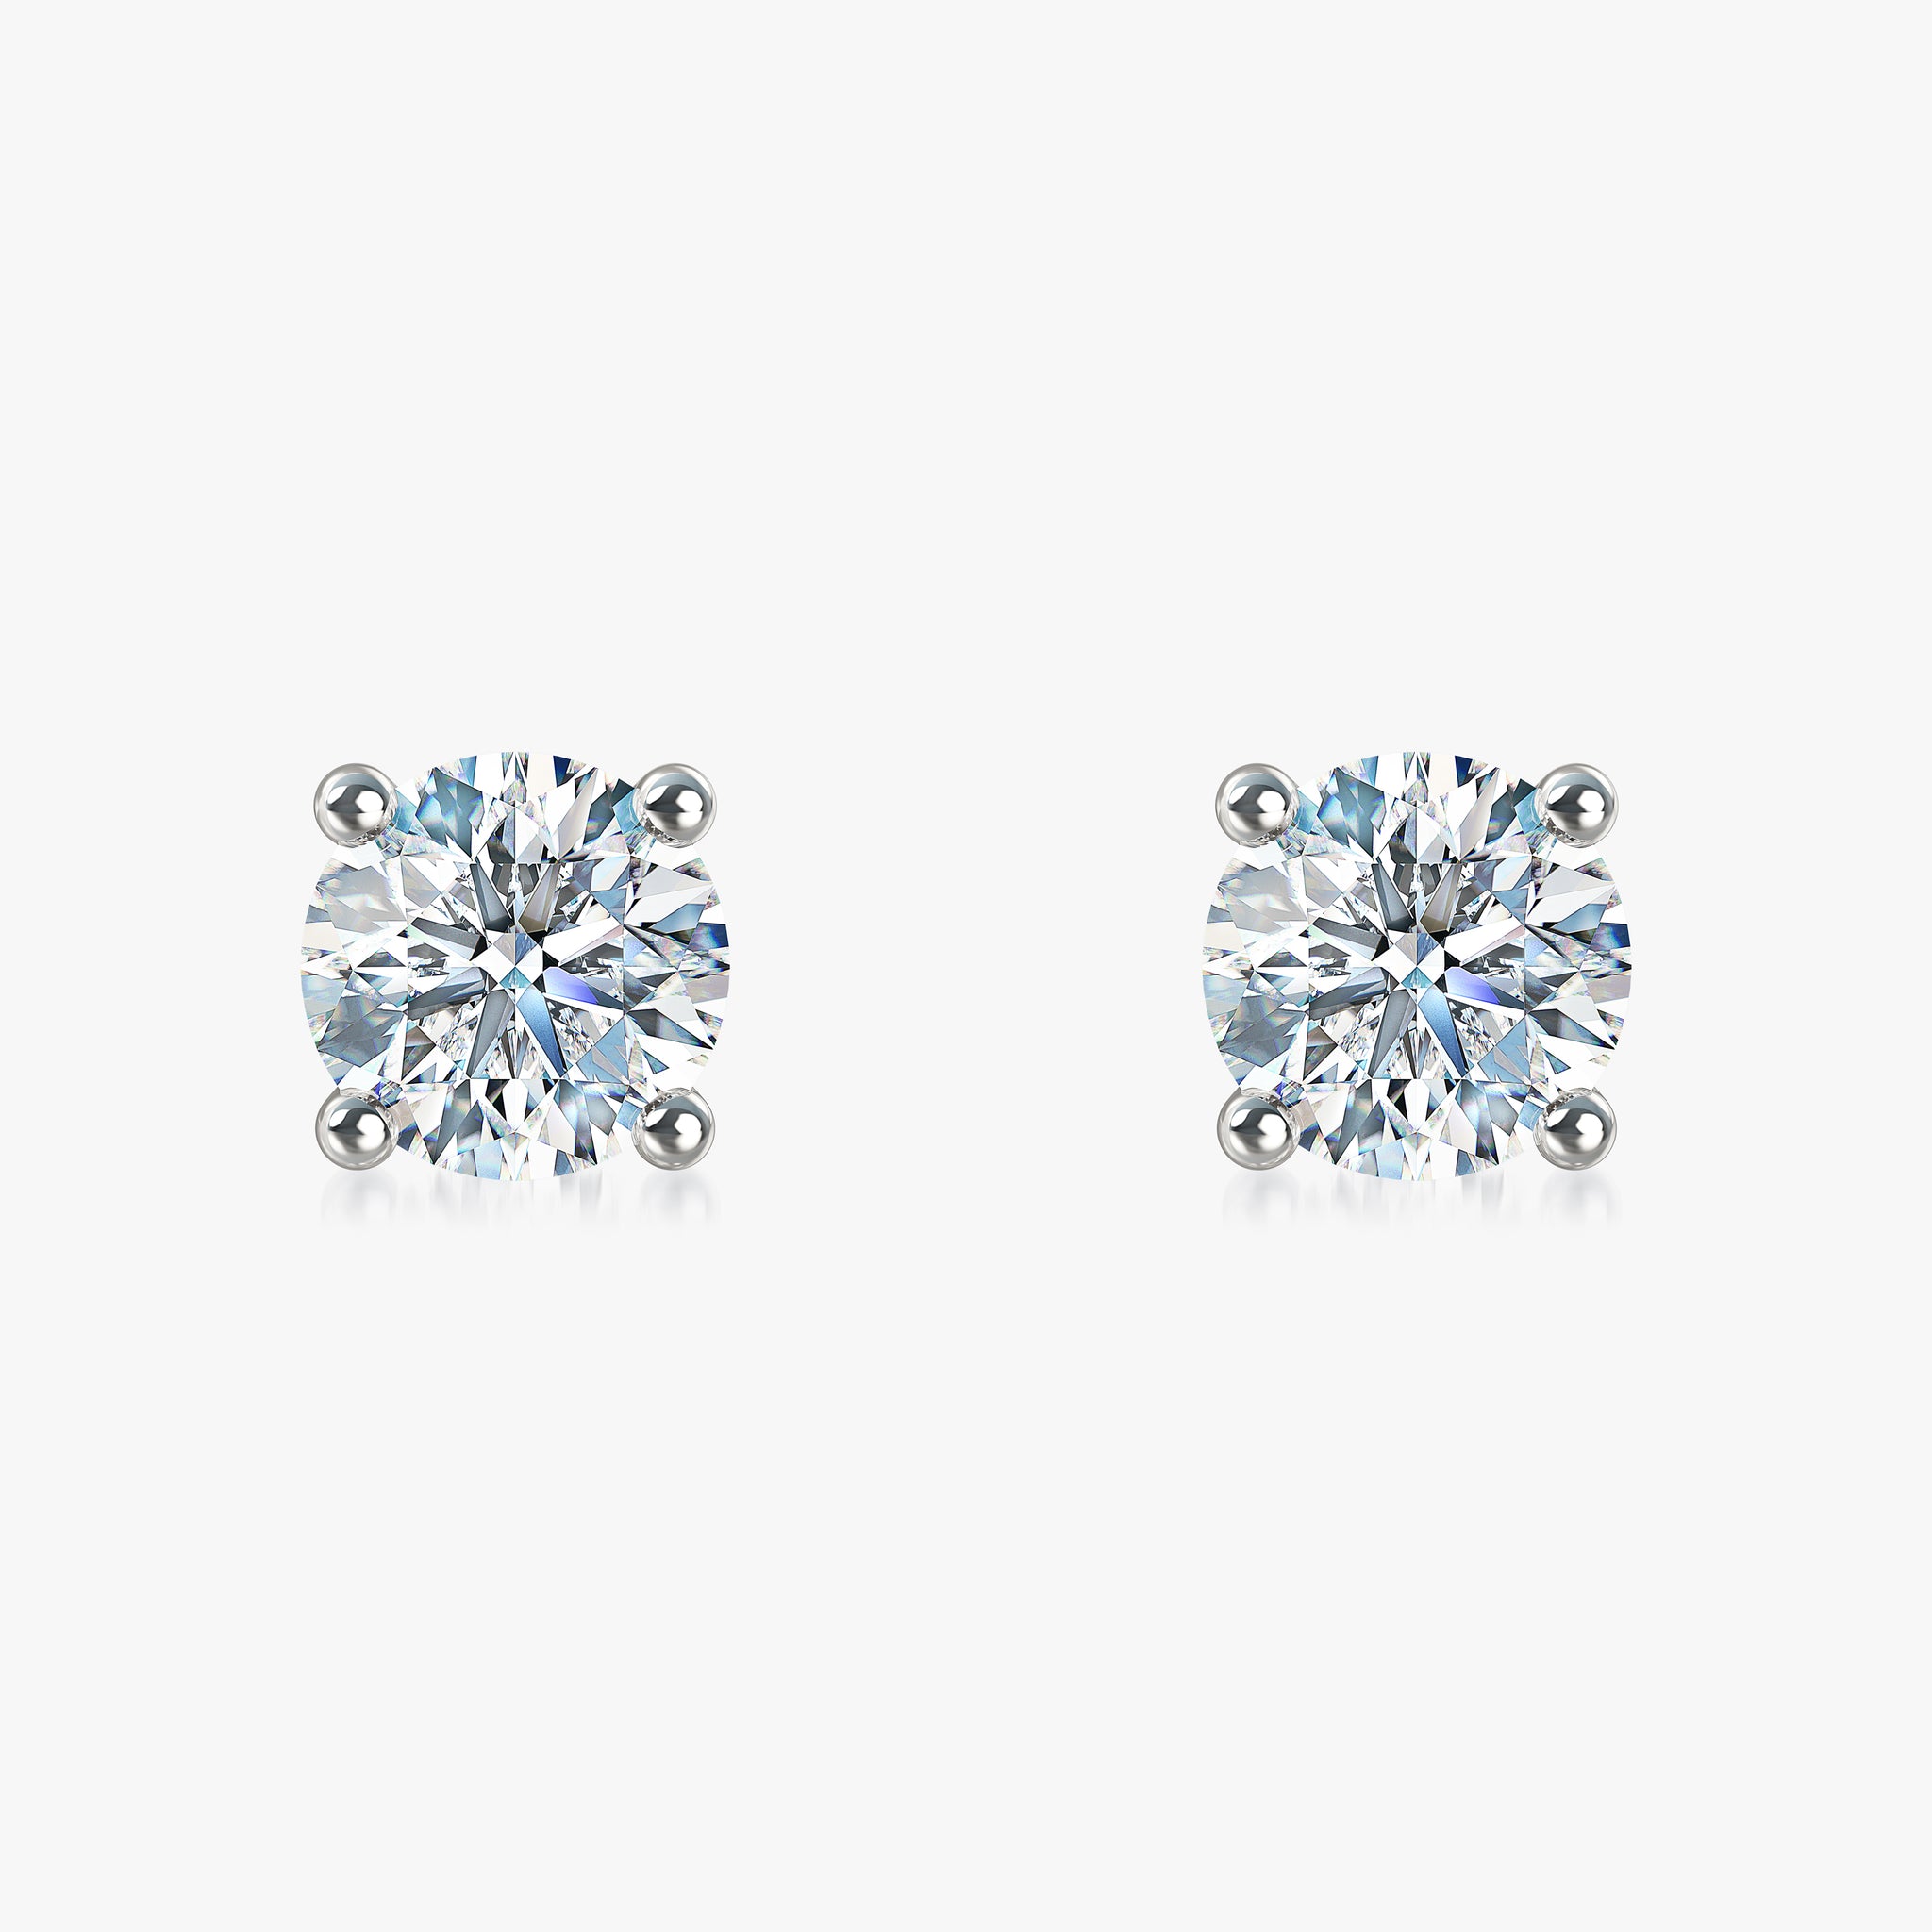 18KT White Gold Diamond Stud Earrings with Guardian Backs - J'EVAR